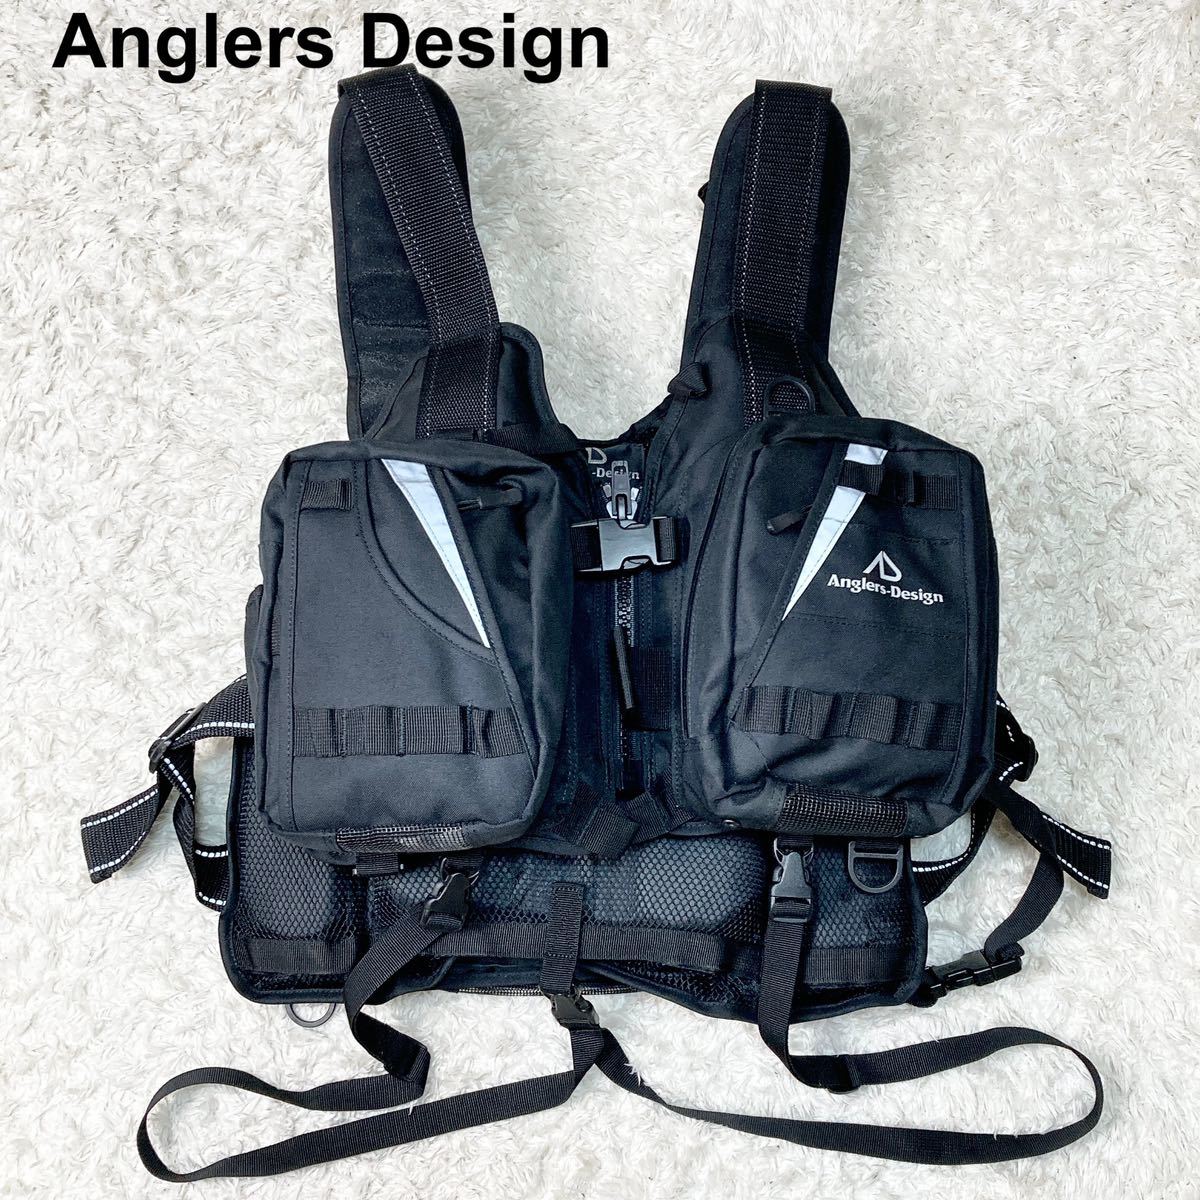  angler z design Anglers Design floating the best fishing vest B112328-77